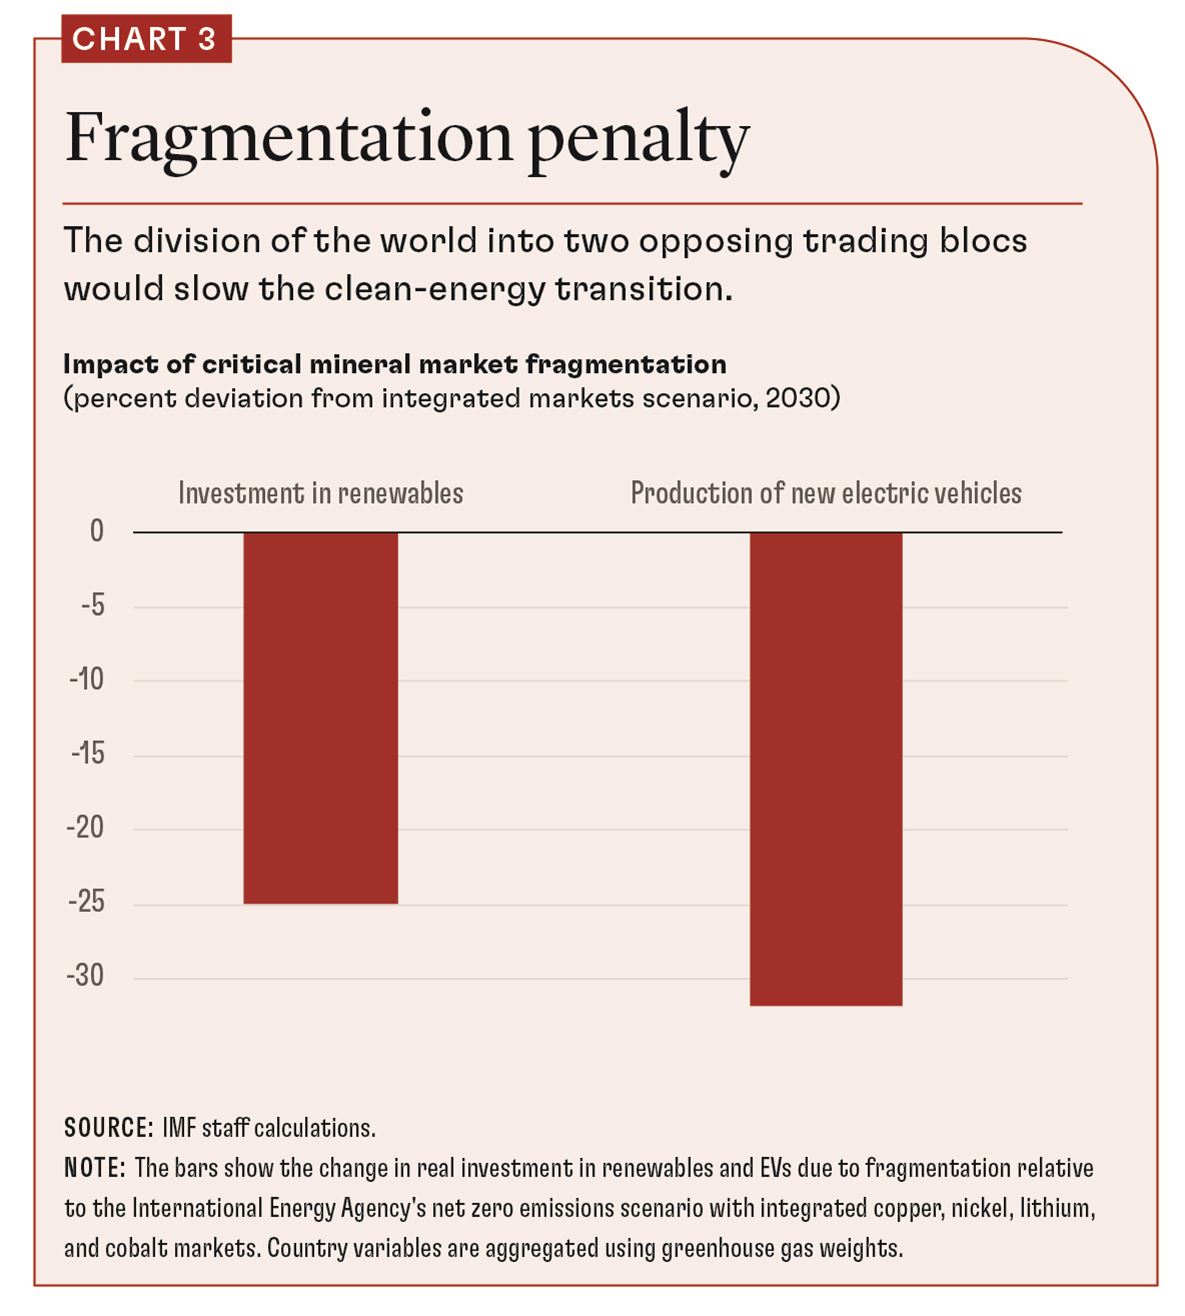 Fragmentation penalty